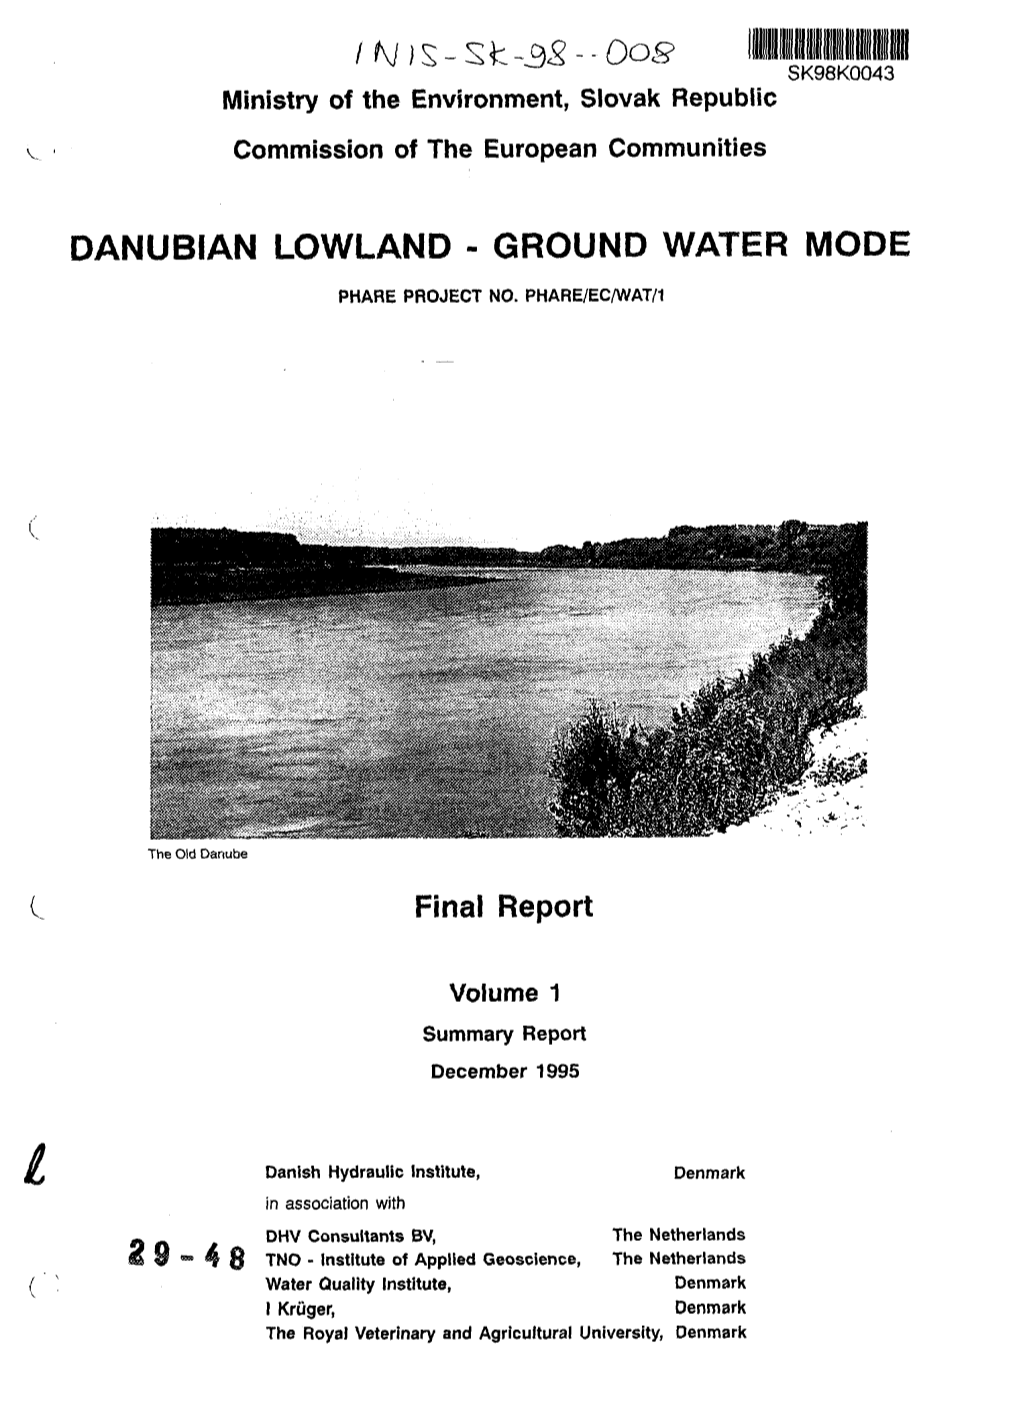 Danubian Lowland - Ground Water Mode